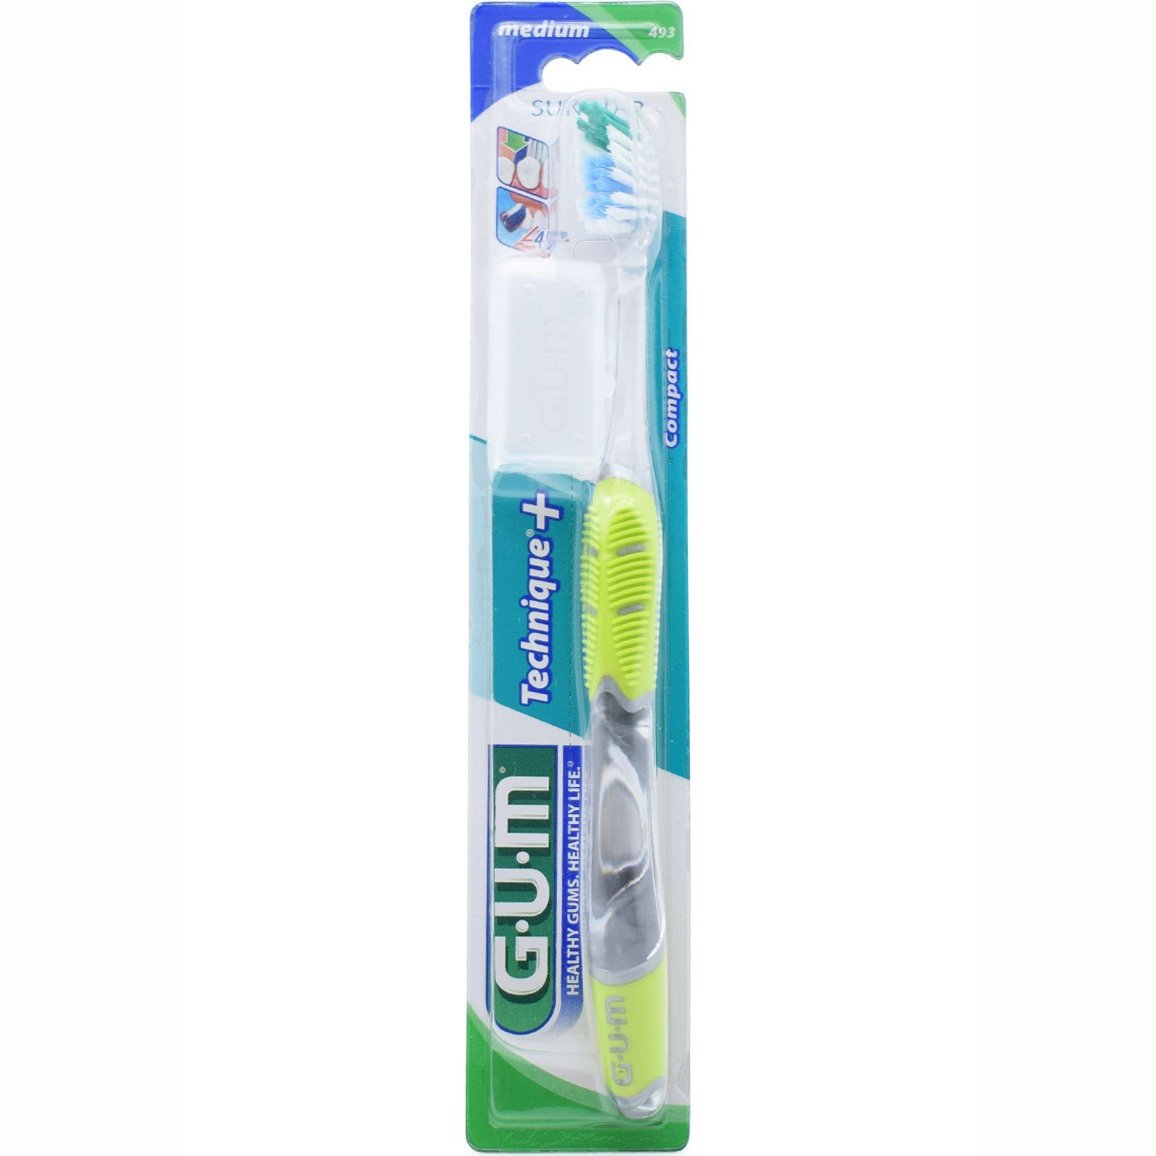 Gum Technique+ Compact Medium Toothbrush Χειροκίνητη Οδοντόβουρτσα Μέτρια με Θήκη Προστασίας 1 Τεμάχιο, Κωδ 493 – Πράσινο